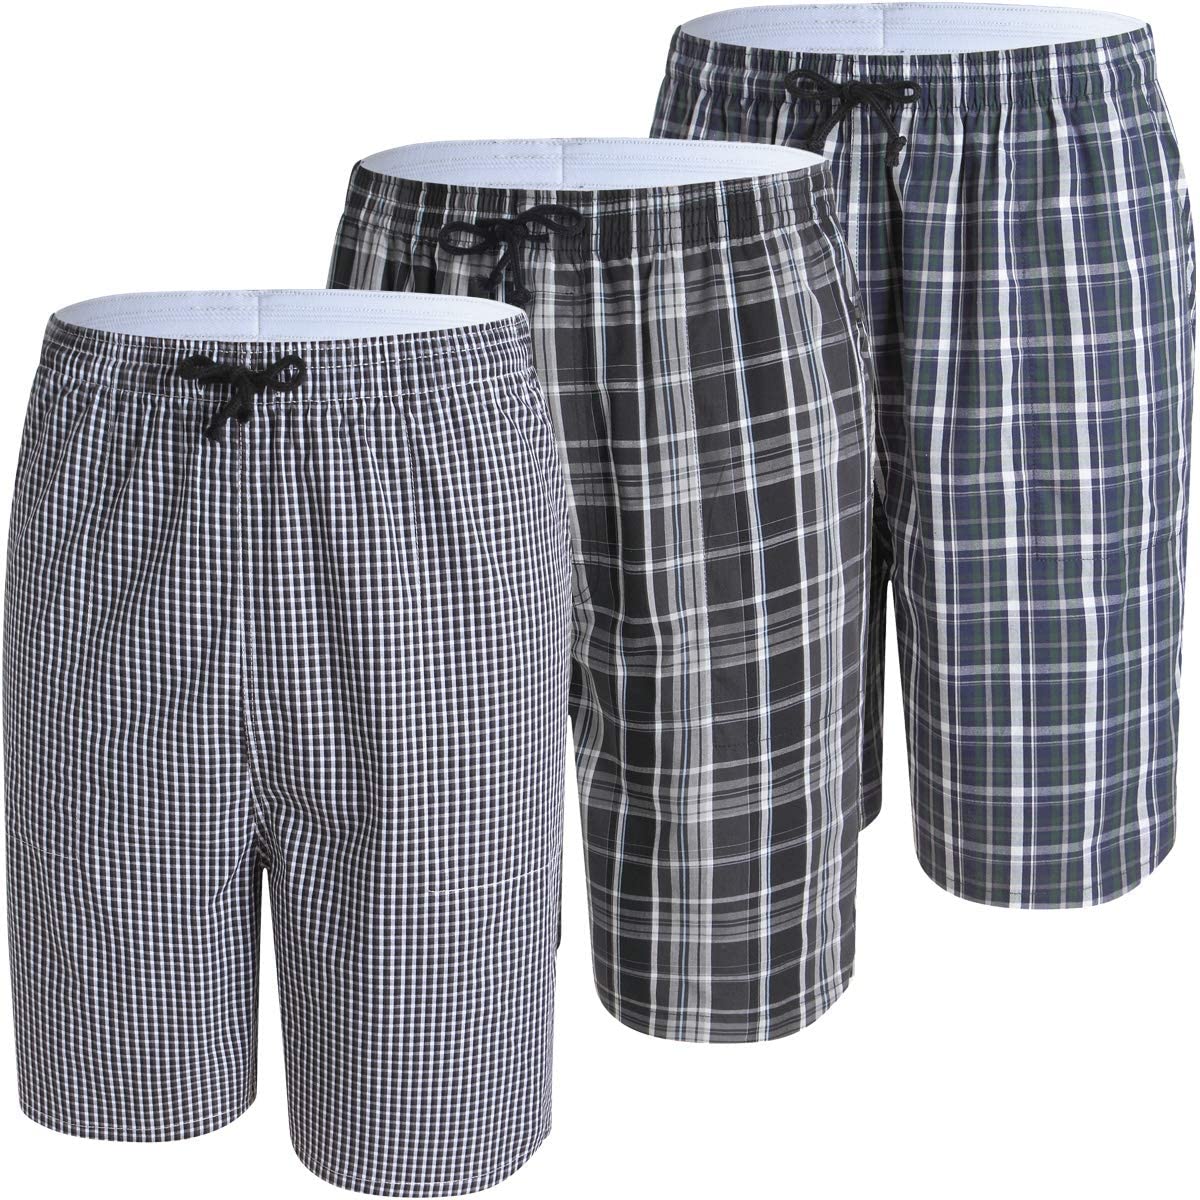 3-Pack Mens Sleepwear Nightwear Pajamas Lounge Soft Touch Cotton Short Pants 